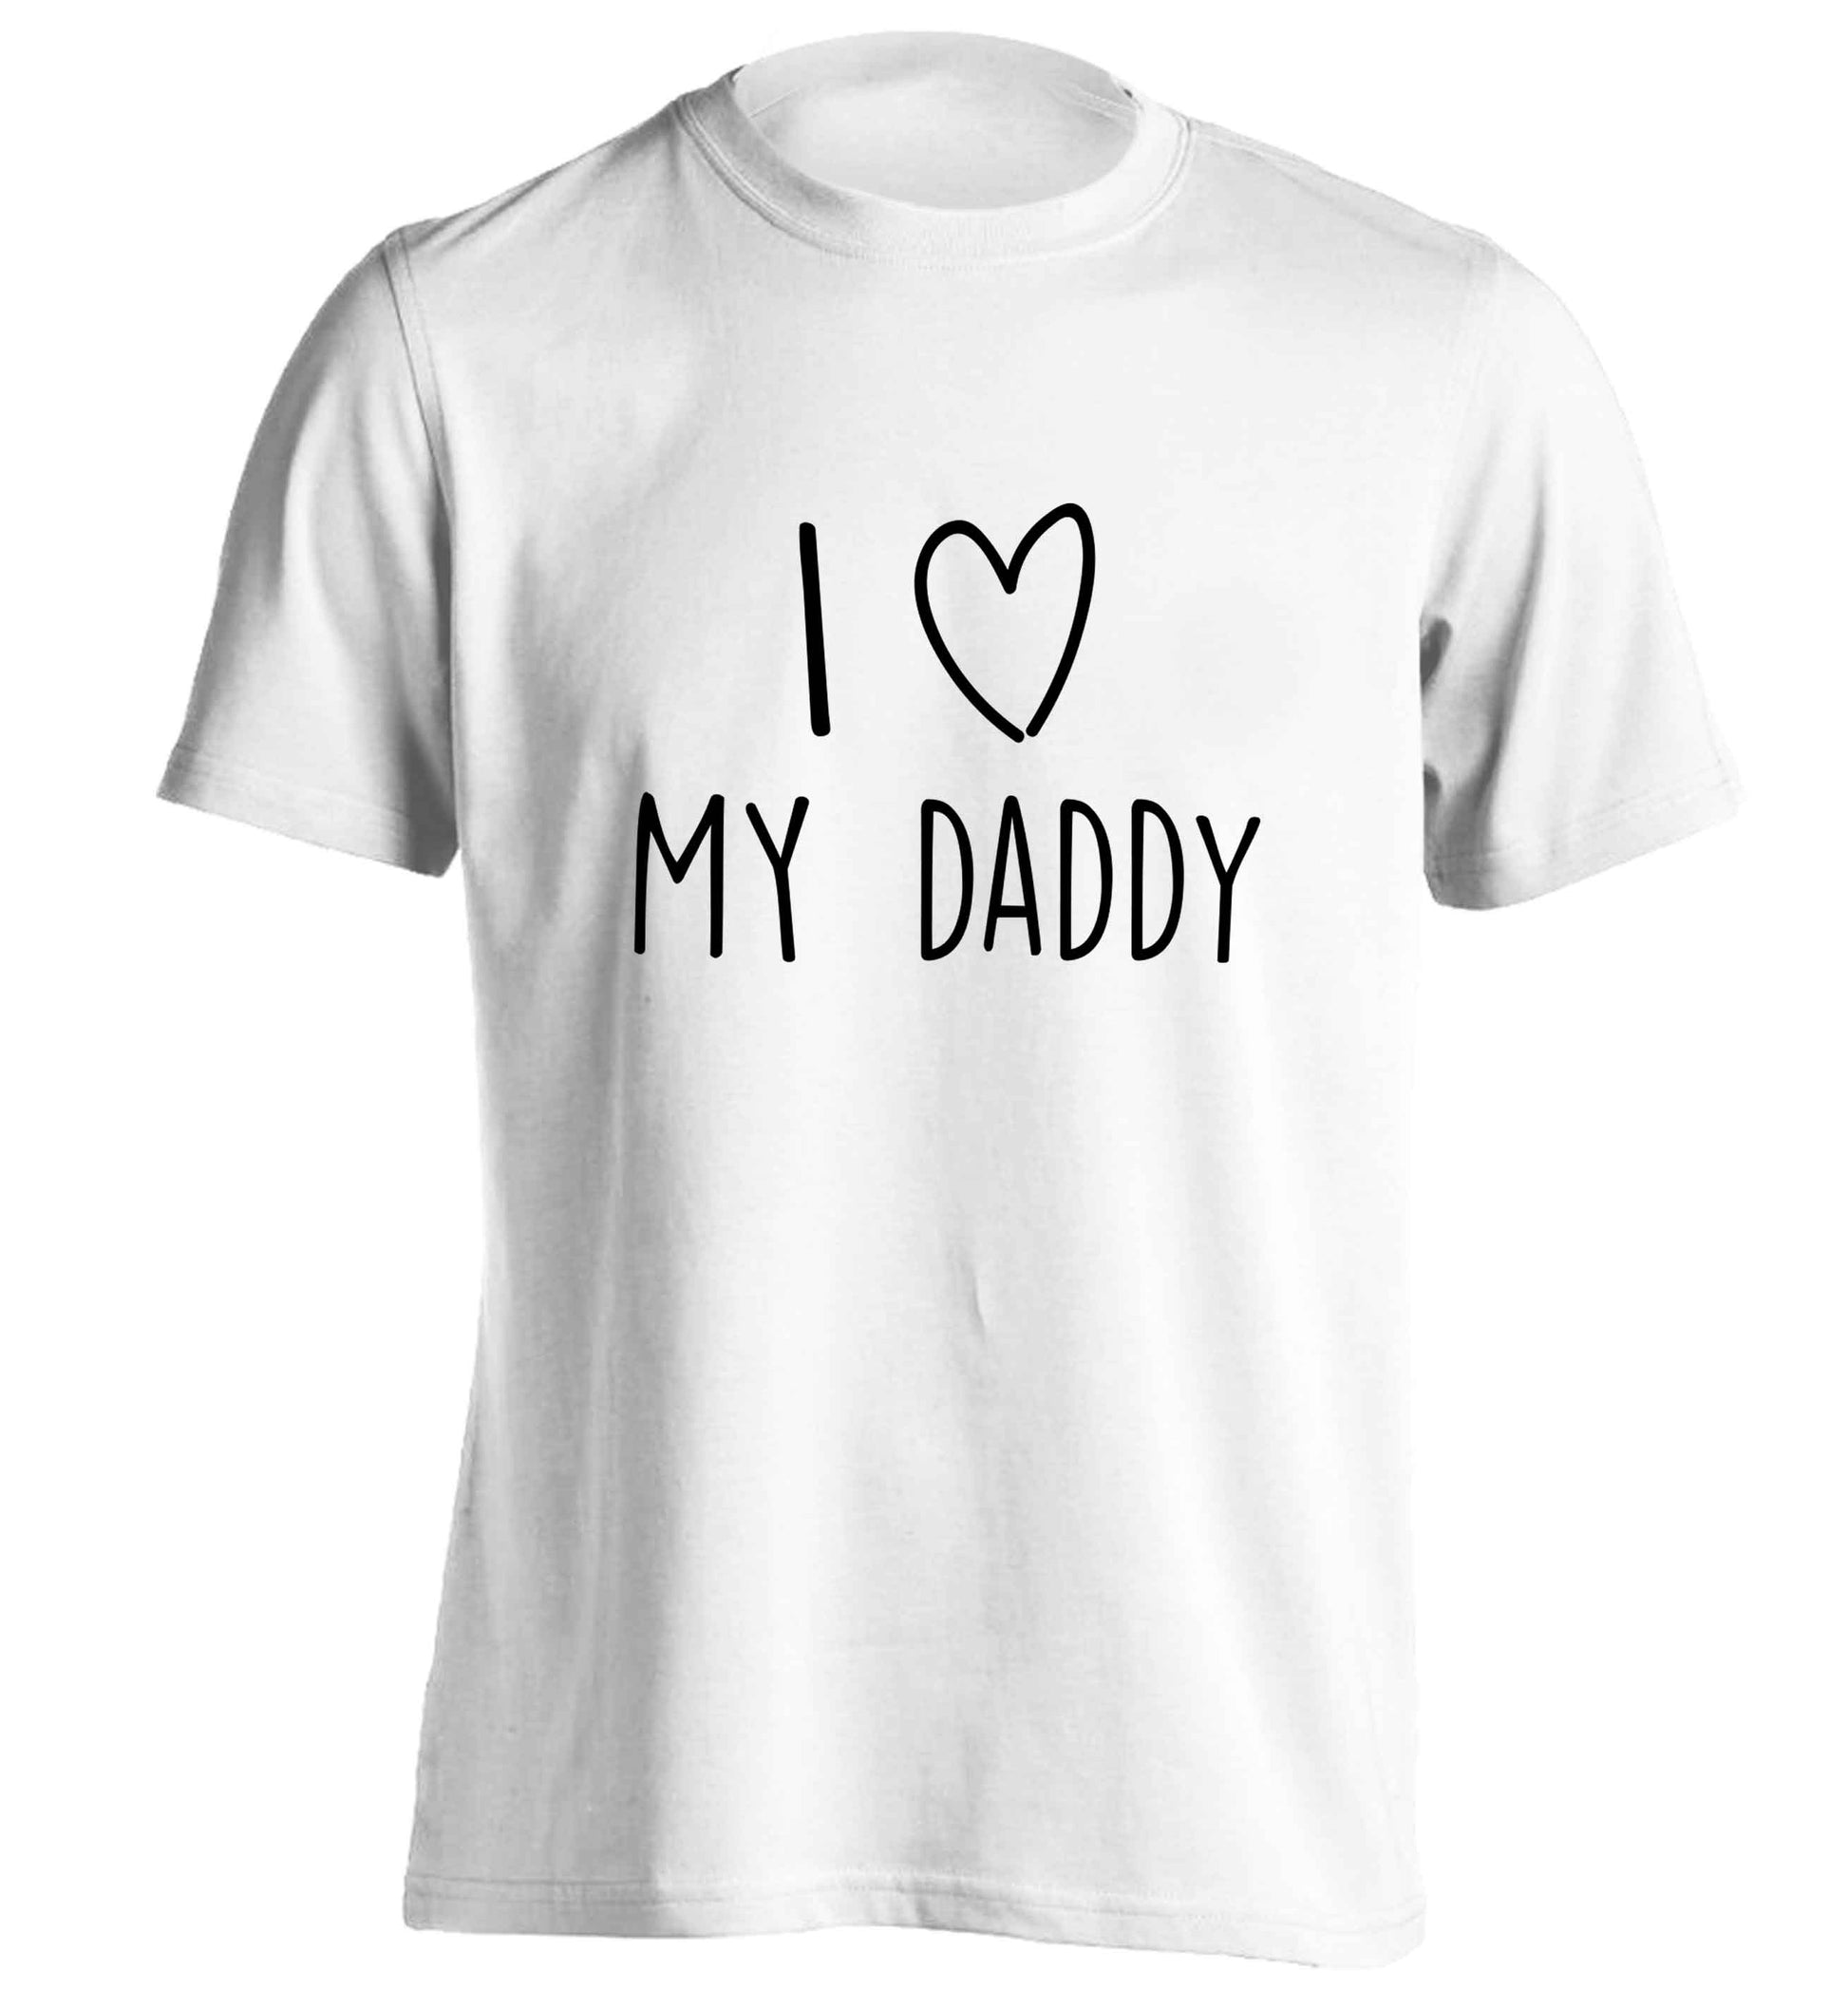 I love my daddy adults unisex white Tshirt 2XL